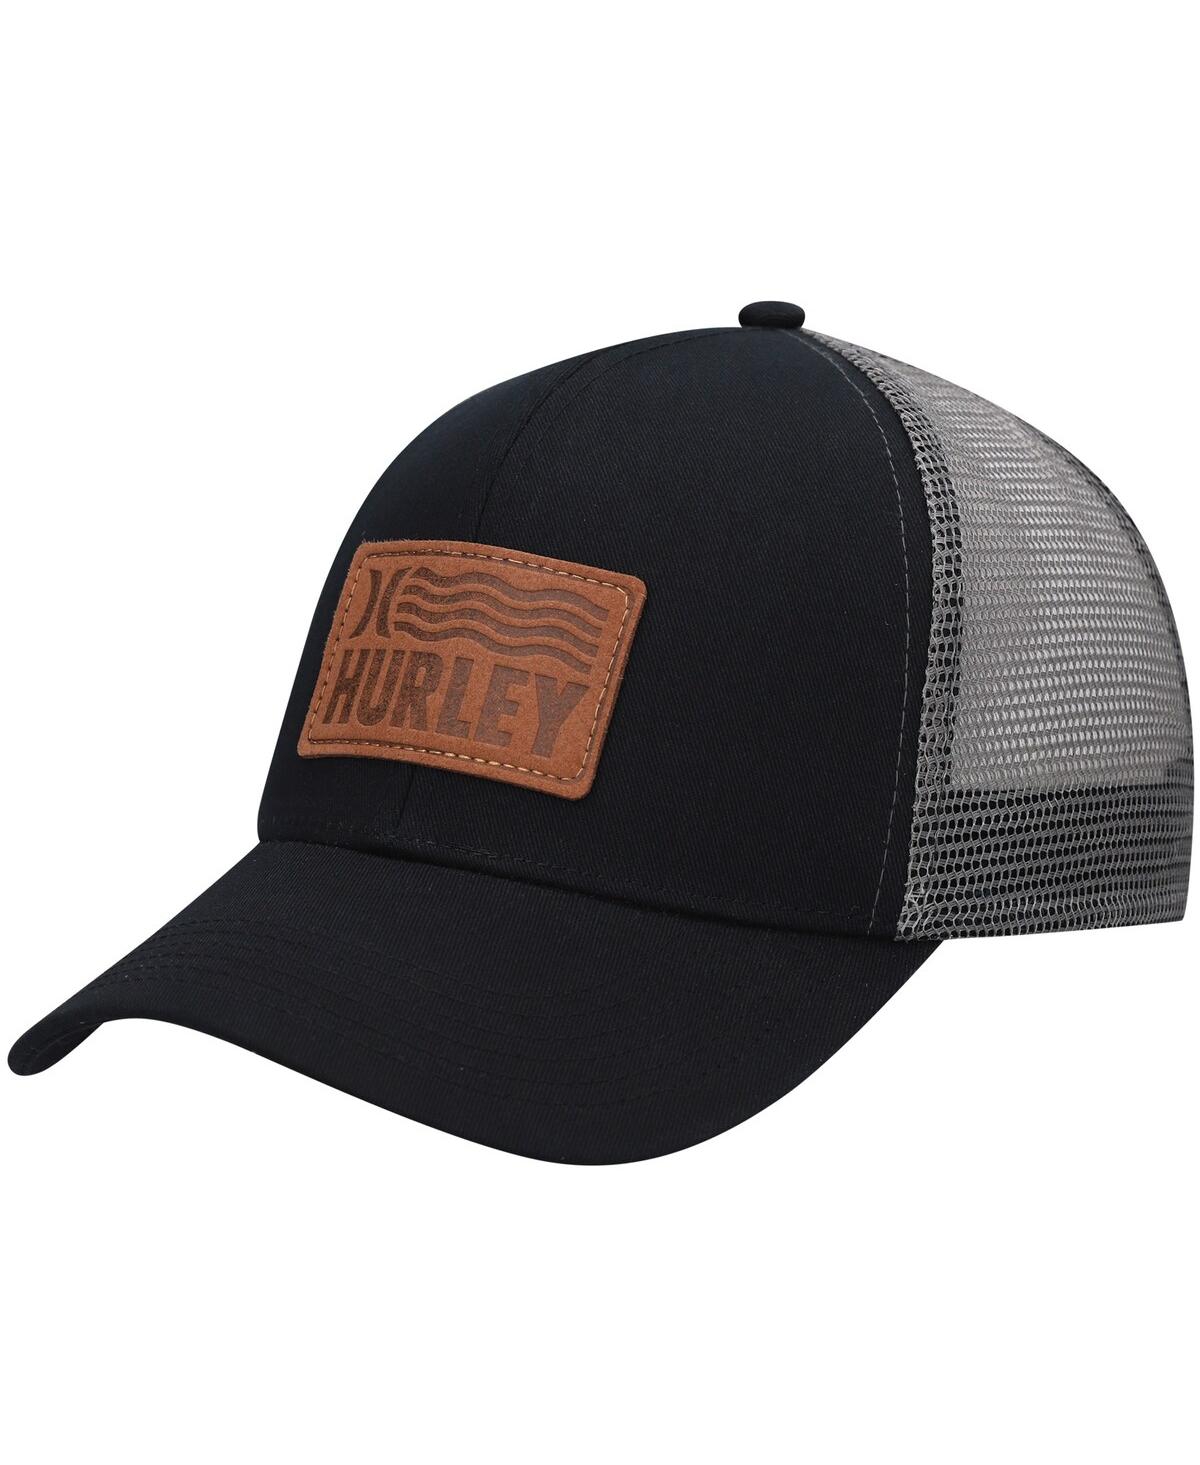 Hurley Men's  Black Waves Trucker Snapback Hat